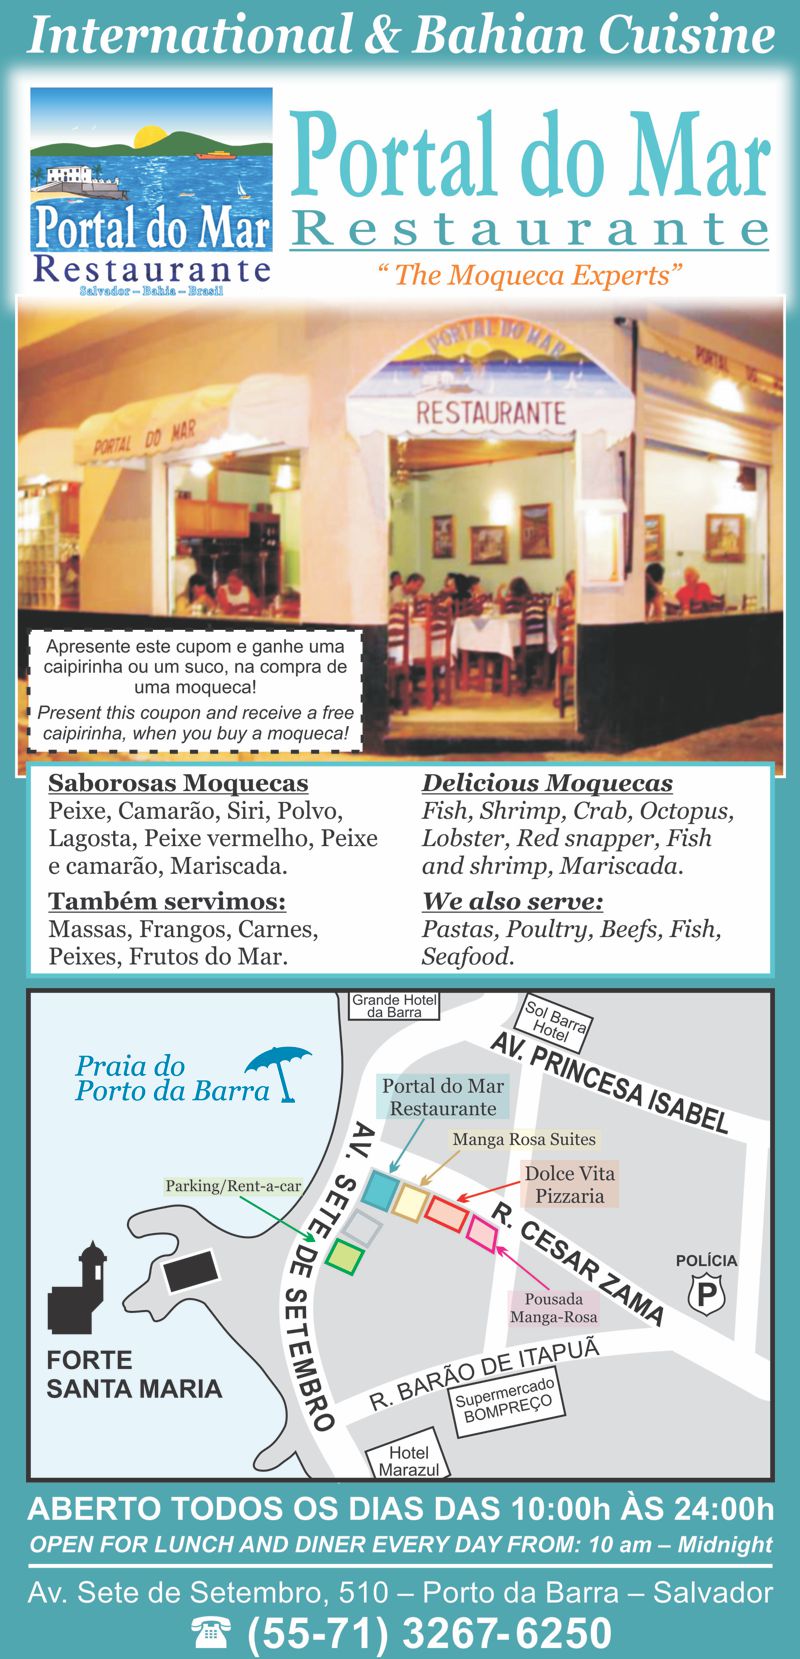 Portal do Mar Restaurant